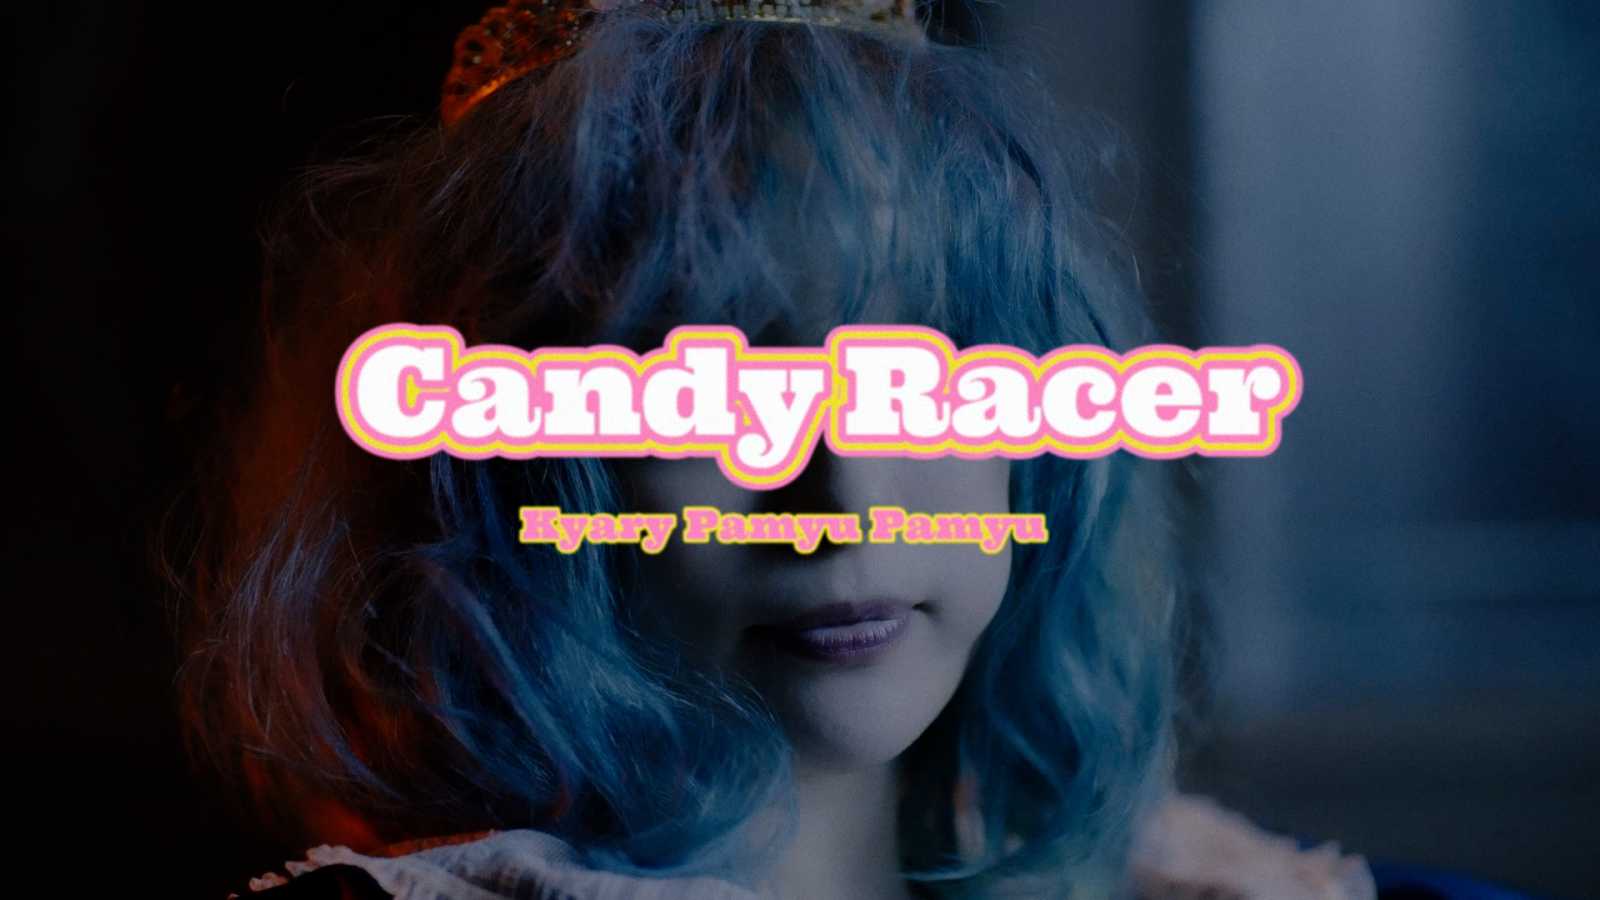 Kyary Pamyu Pamyu Unveils Music Video for "Candy Racer" © Kyary Pamyu Pamyu. All rights reserved.